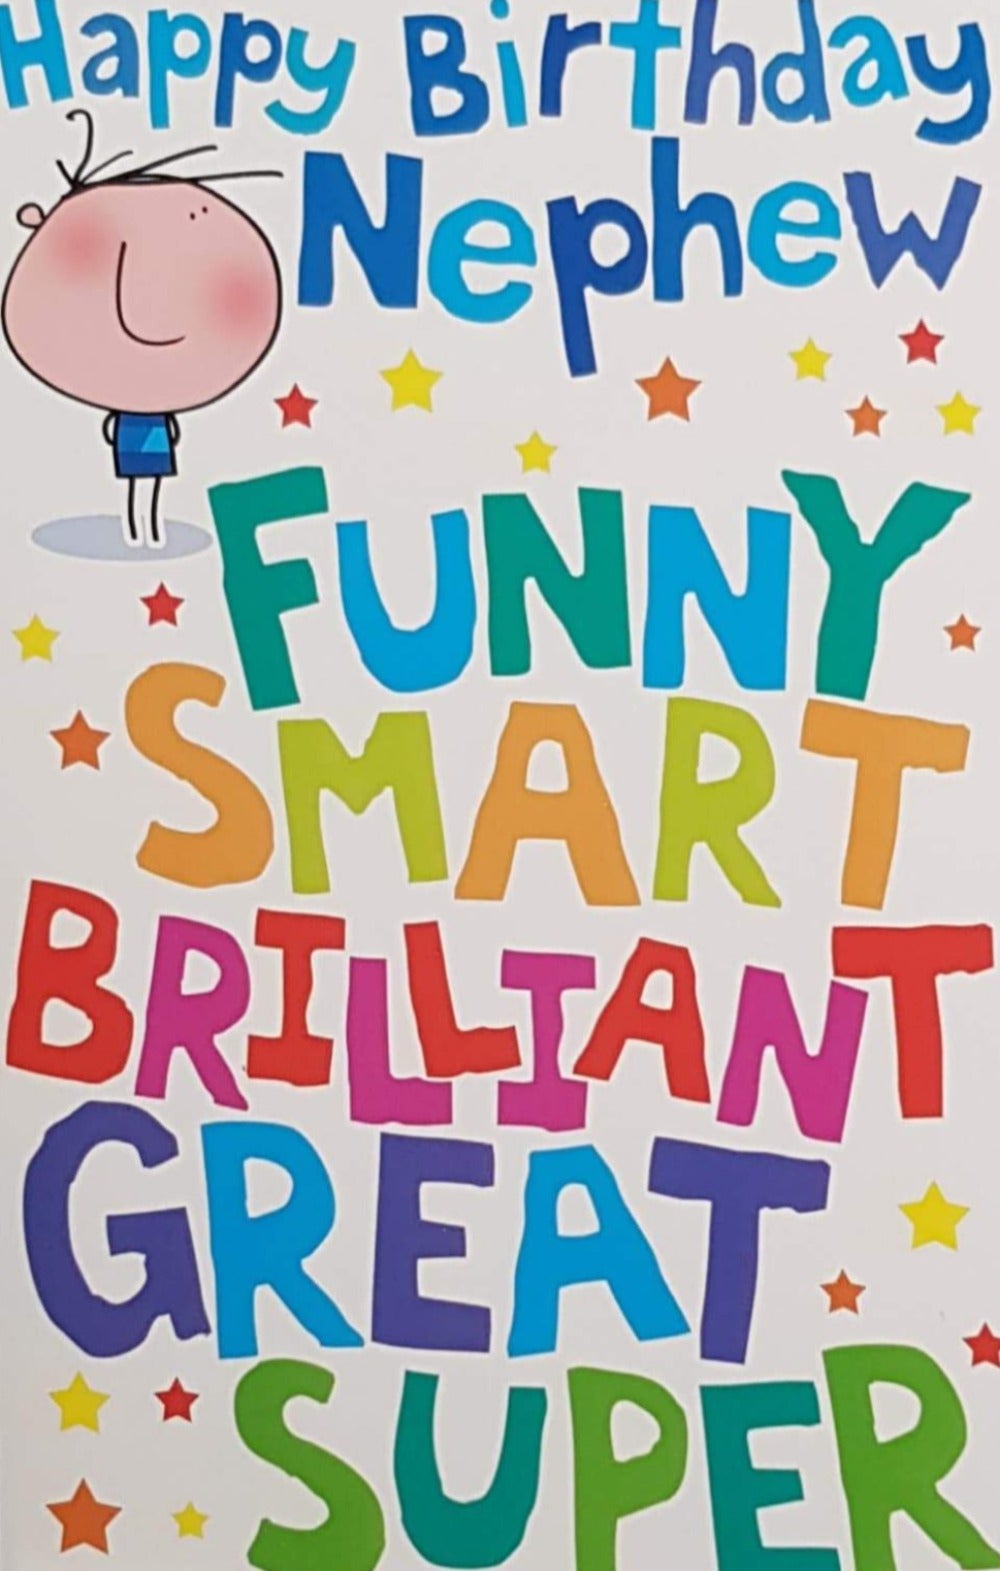 Birthday Card - Nephew / Funny, Smart, Brilliant...